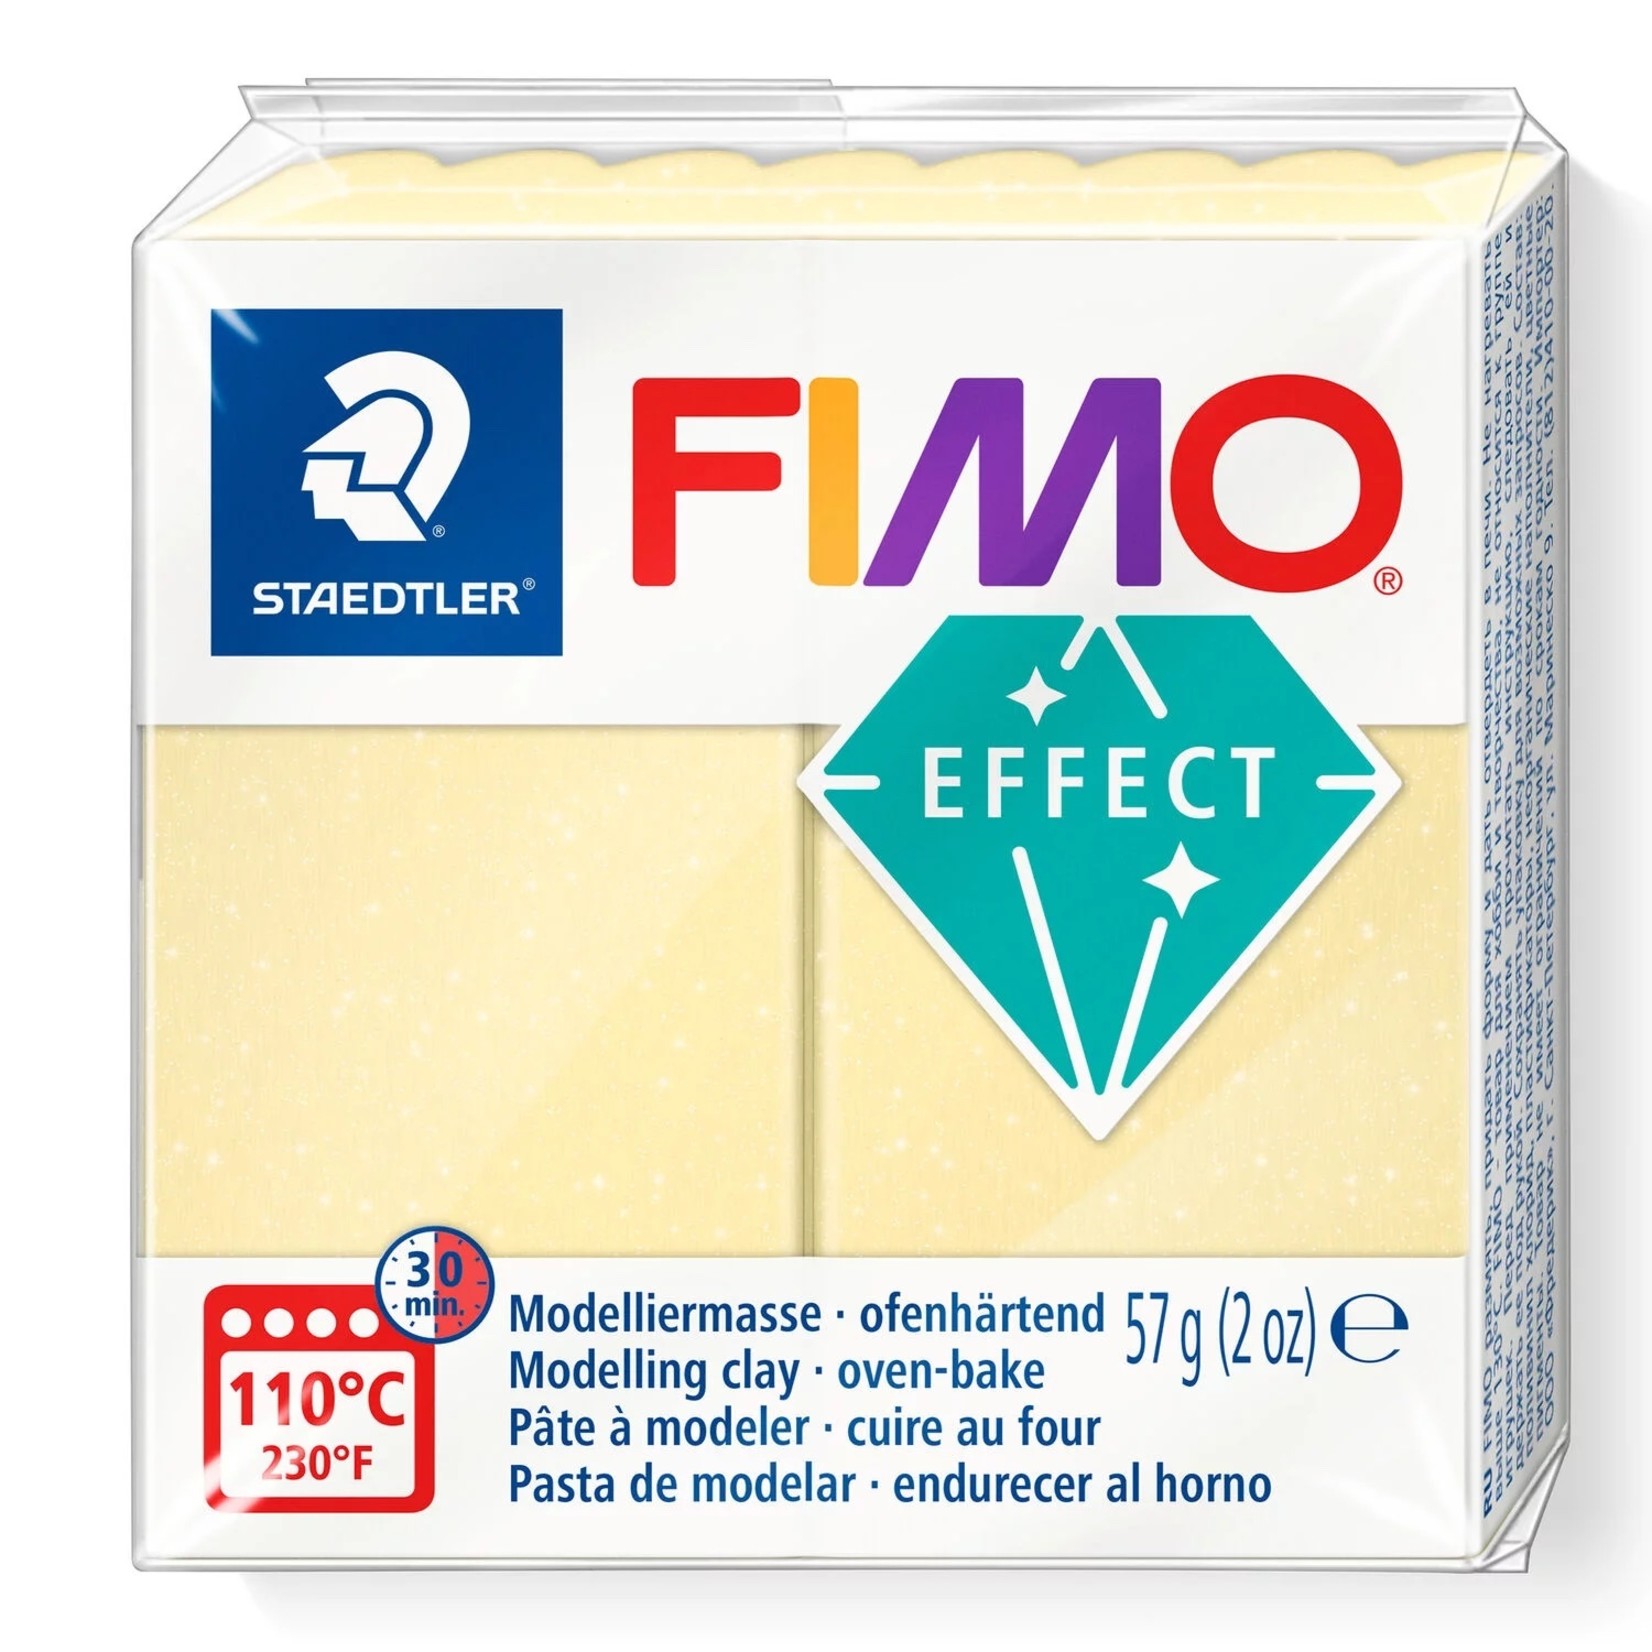 STAEDTLER FIMO EFFECT GEMSTONE 106 CITRINE